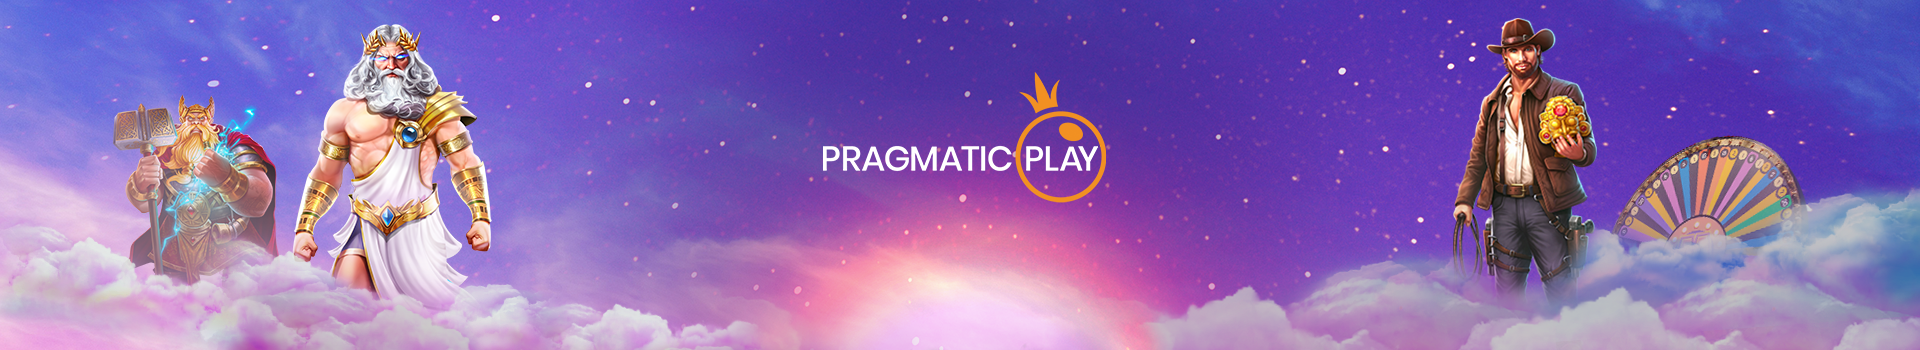 Pragmatic play banner